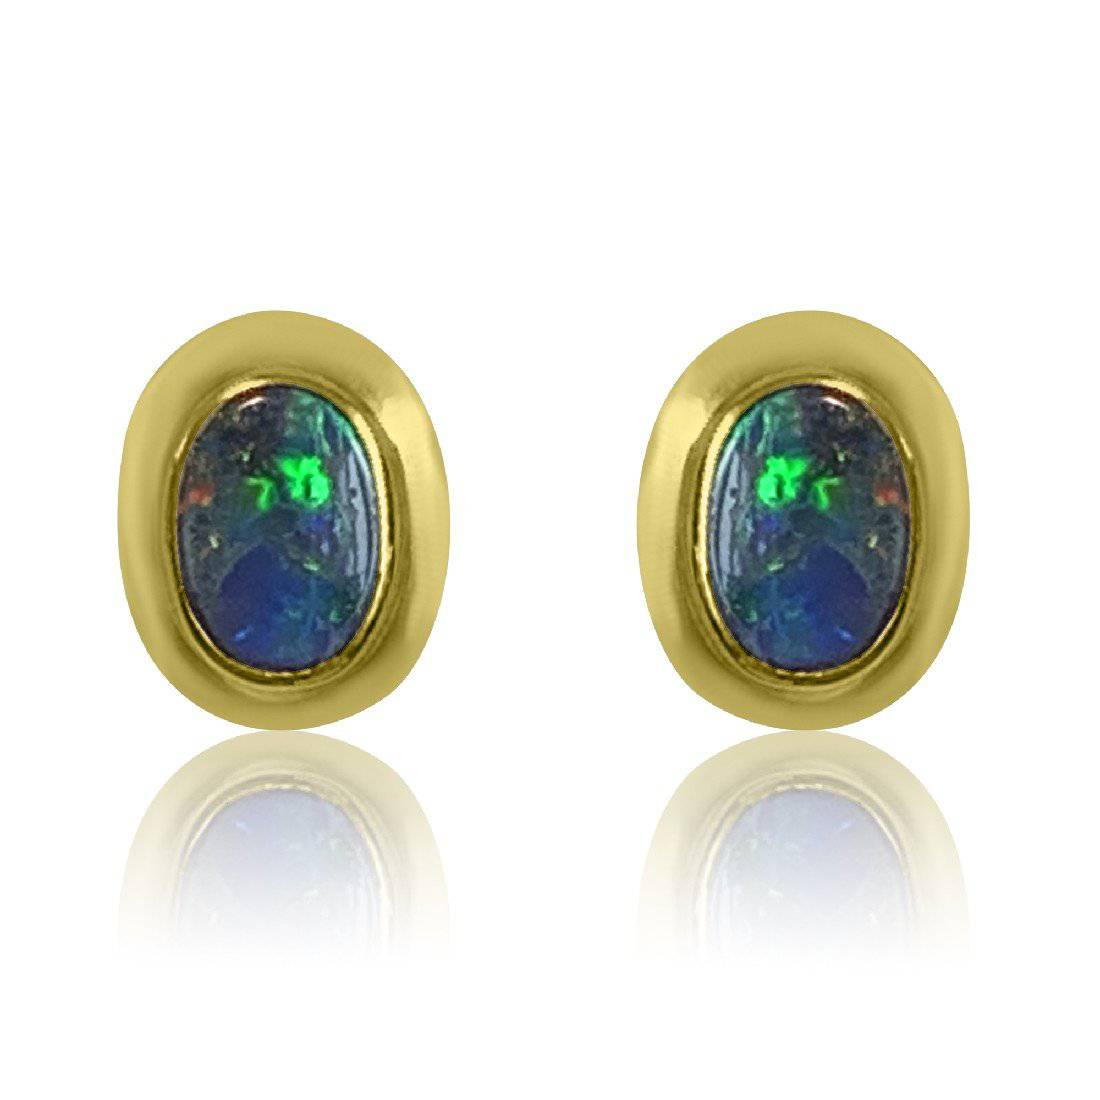 9kt Black Opal studs - Masterpiece Jewellery Opal & Gems Sydney Australia | Online Shop